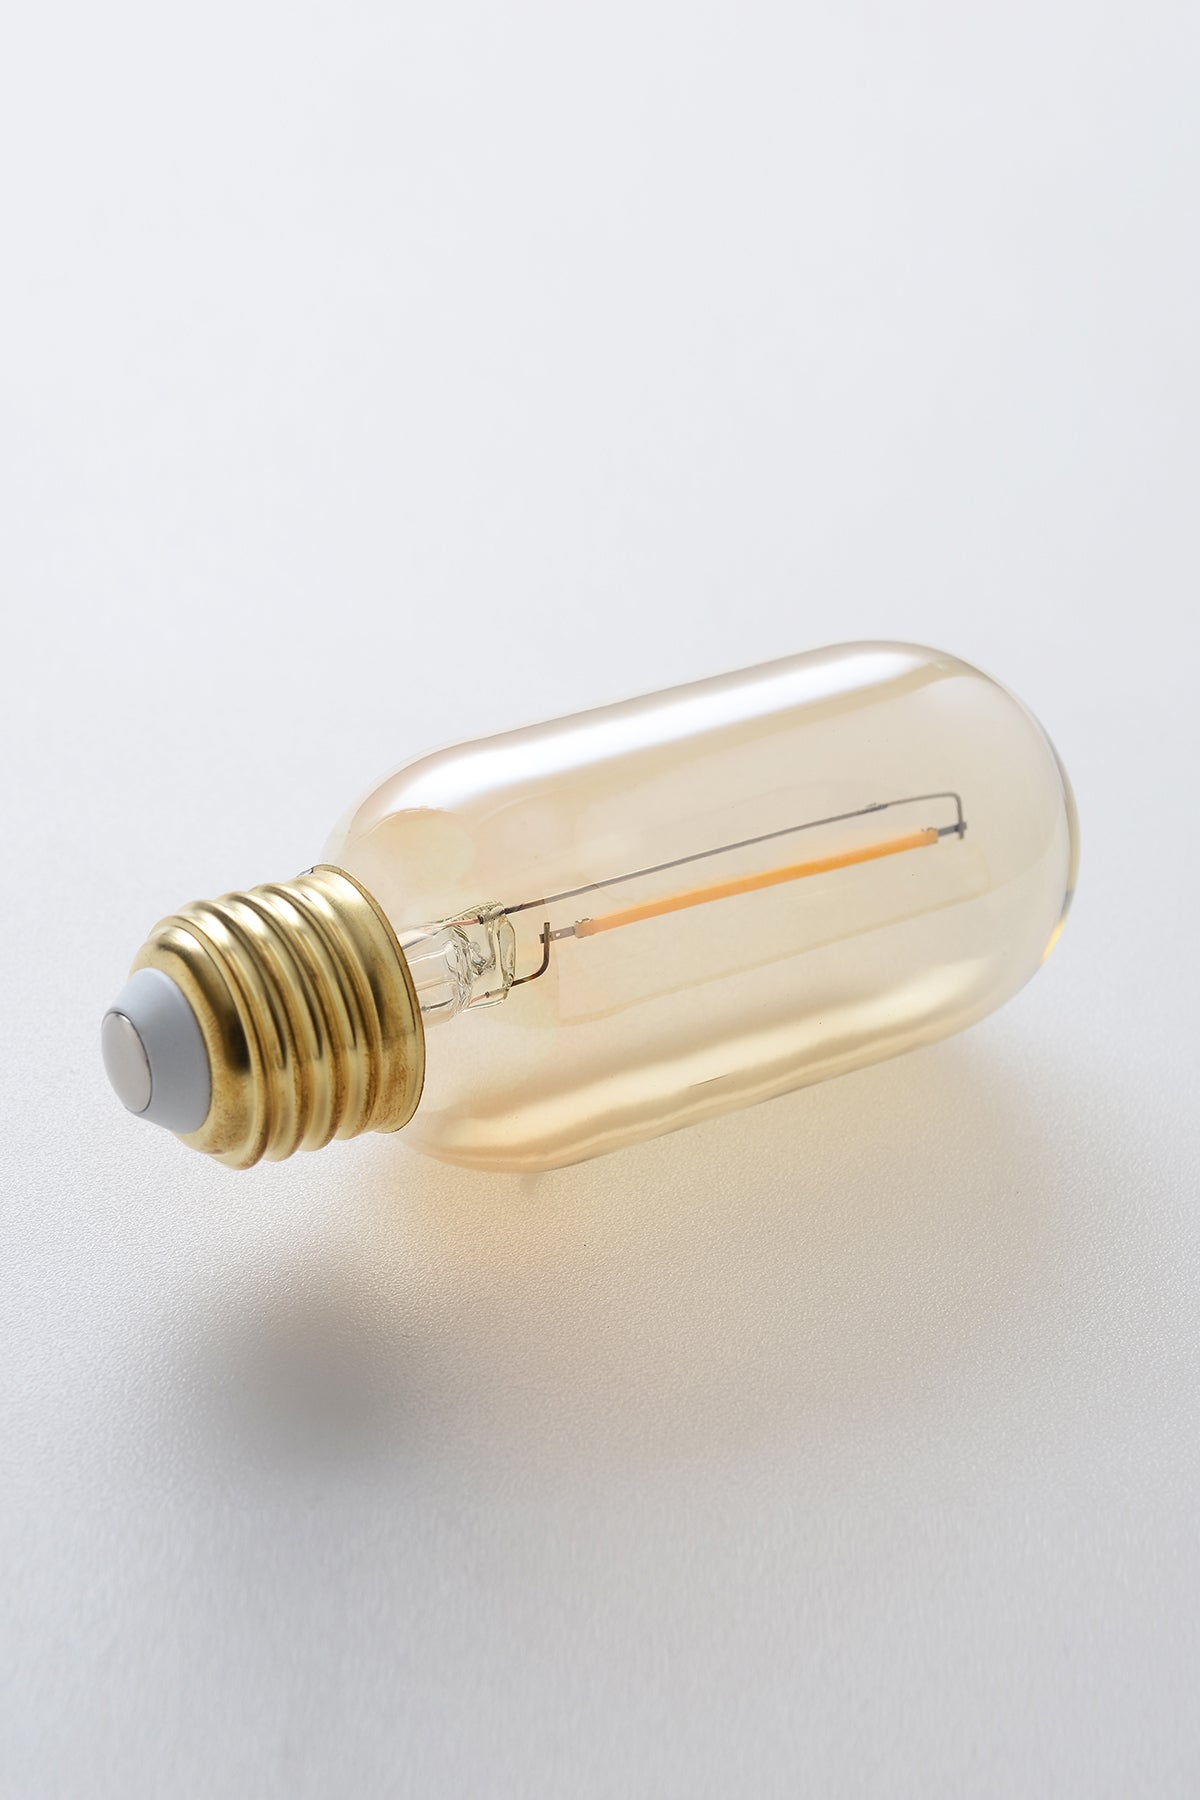 Modern T14 LED light bulb with warm vintage Edison style glow